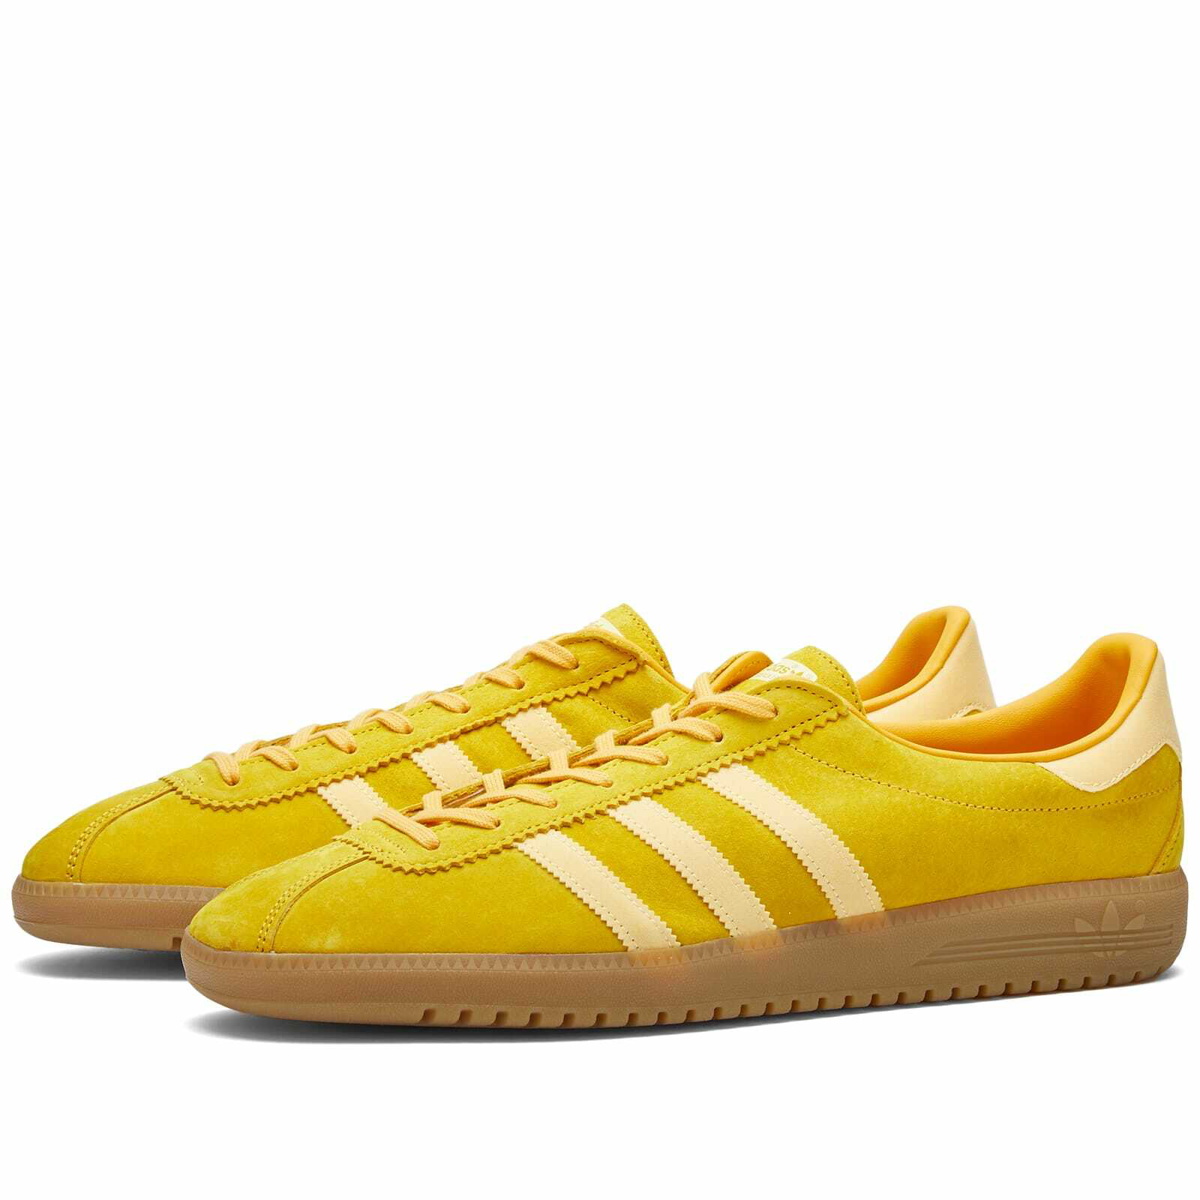 Adidas Bermuda Sneakers in Gold/Yellow adidas